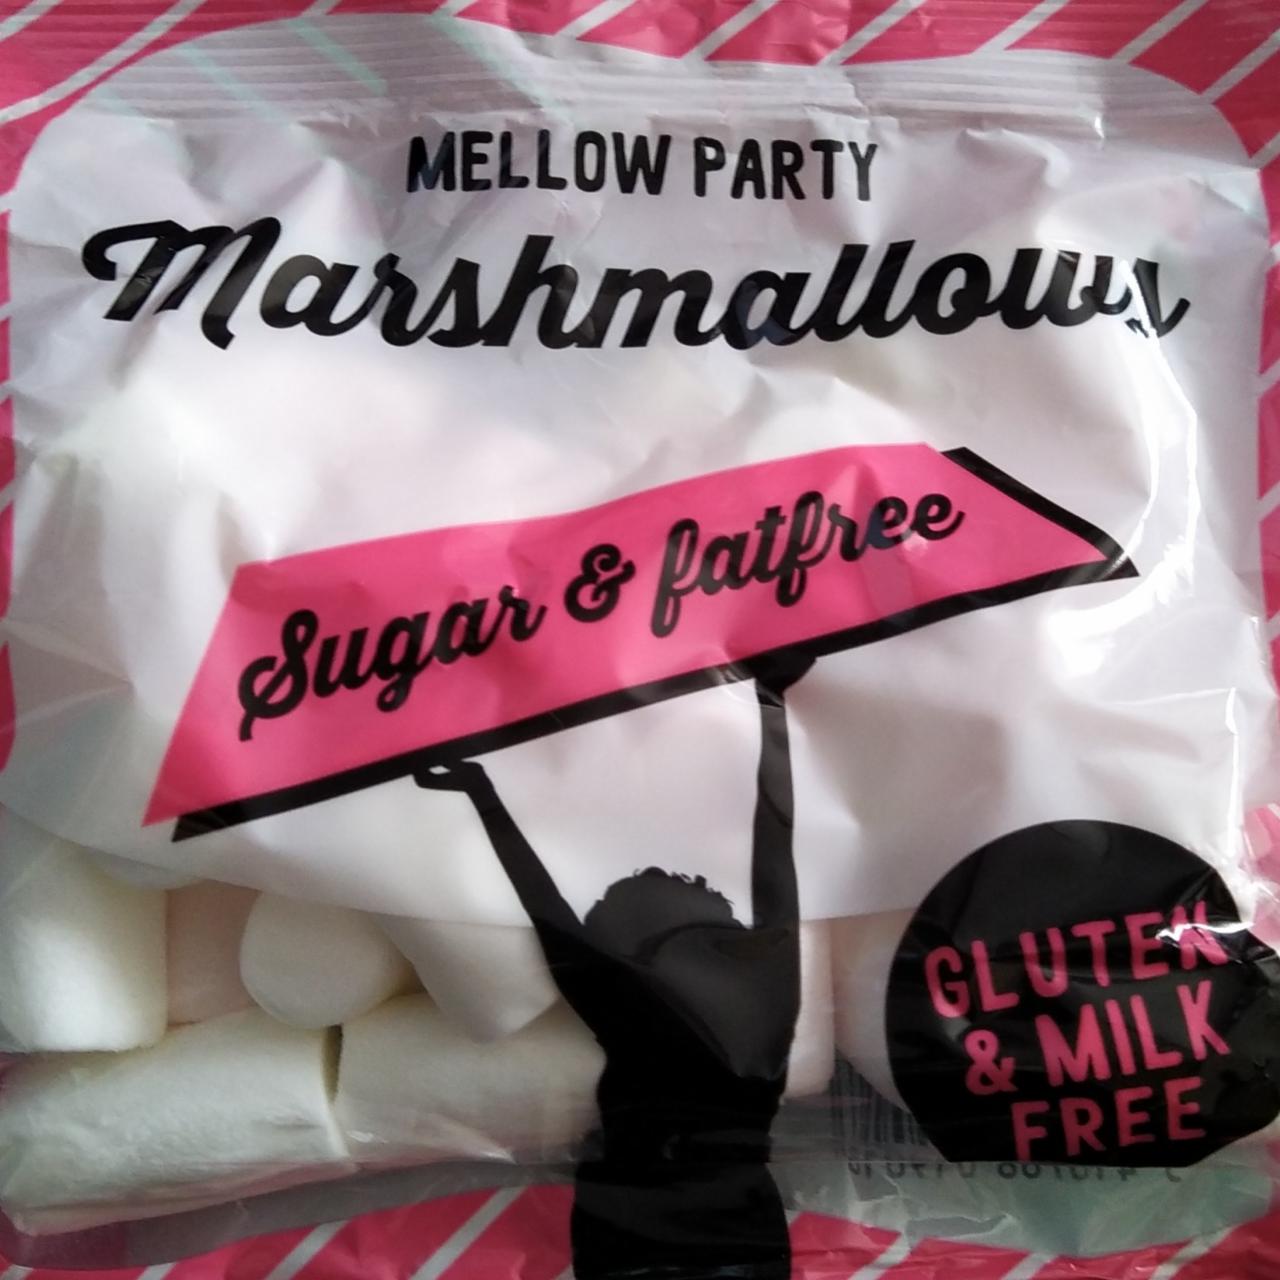 Fotografie - Marshmallows sugar & fatfree Mellow Party